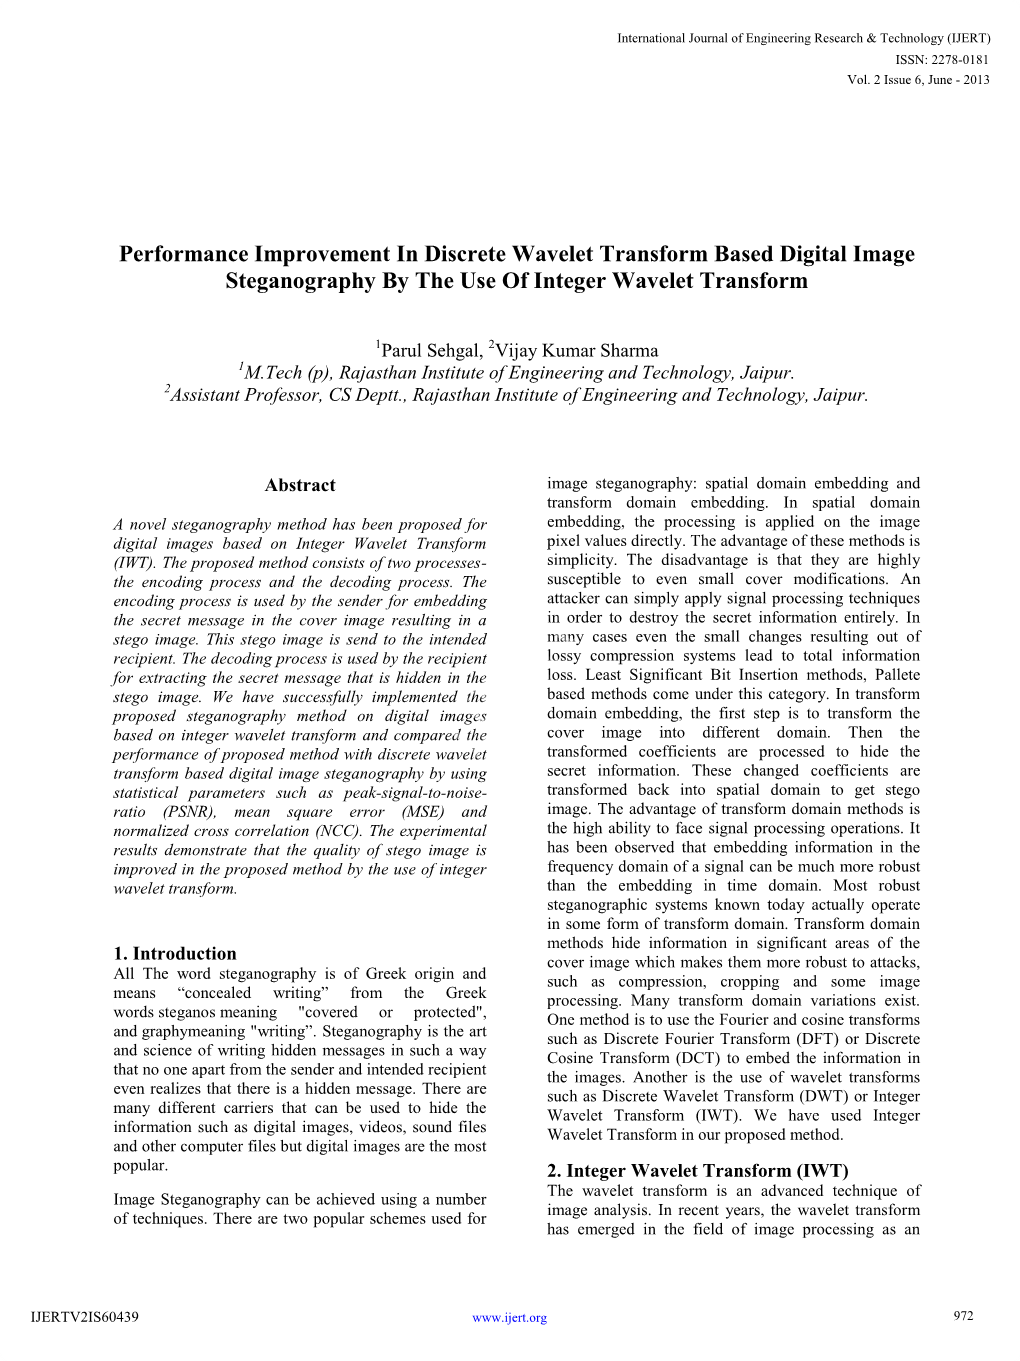 Performance Improvement in Discrete Wavelet Transform Based Digital Image Steganography by the Use of Integer Wavelet Transform